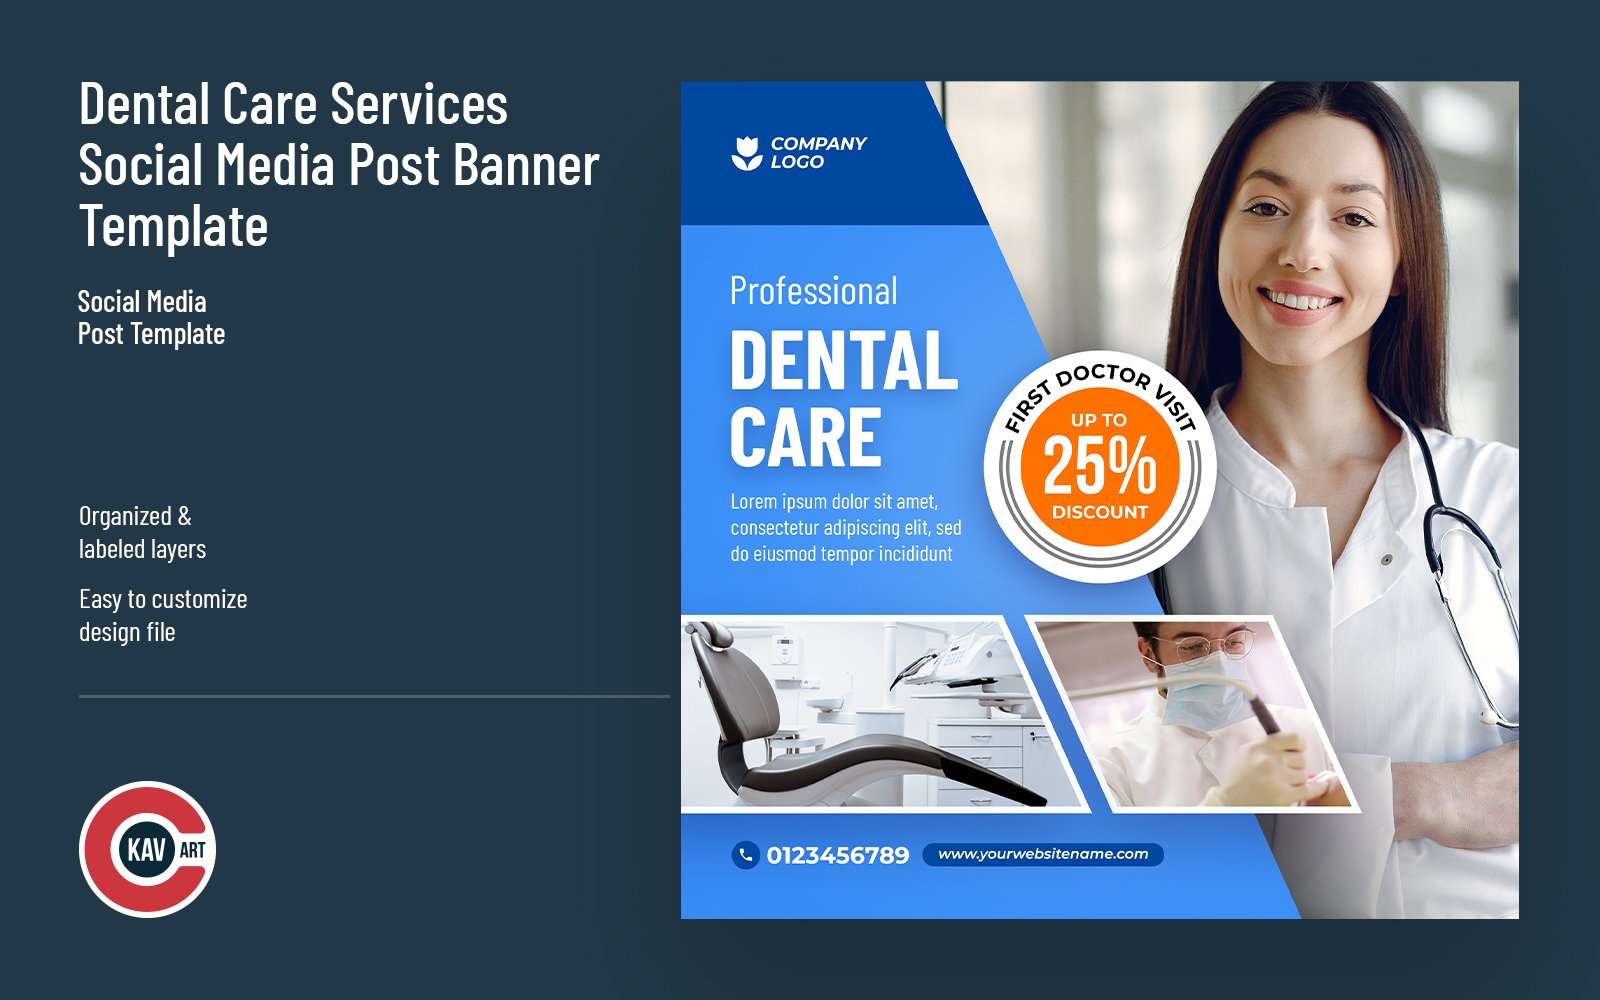 Dental Care Services Social Media Post Template